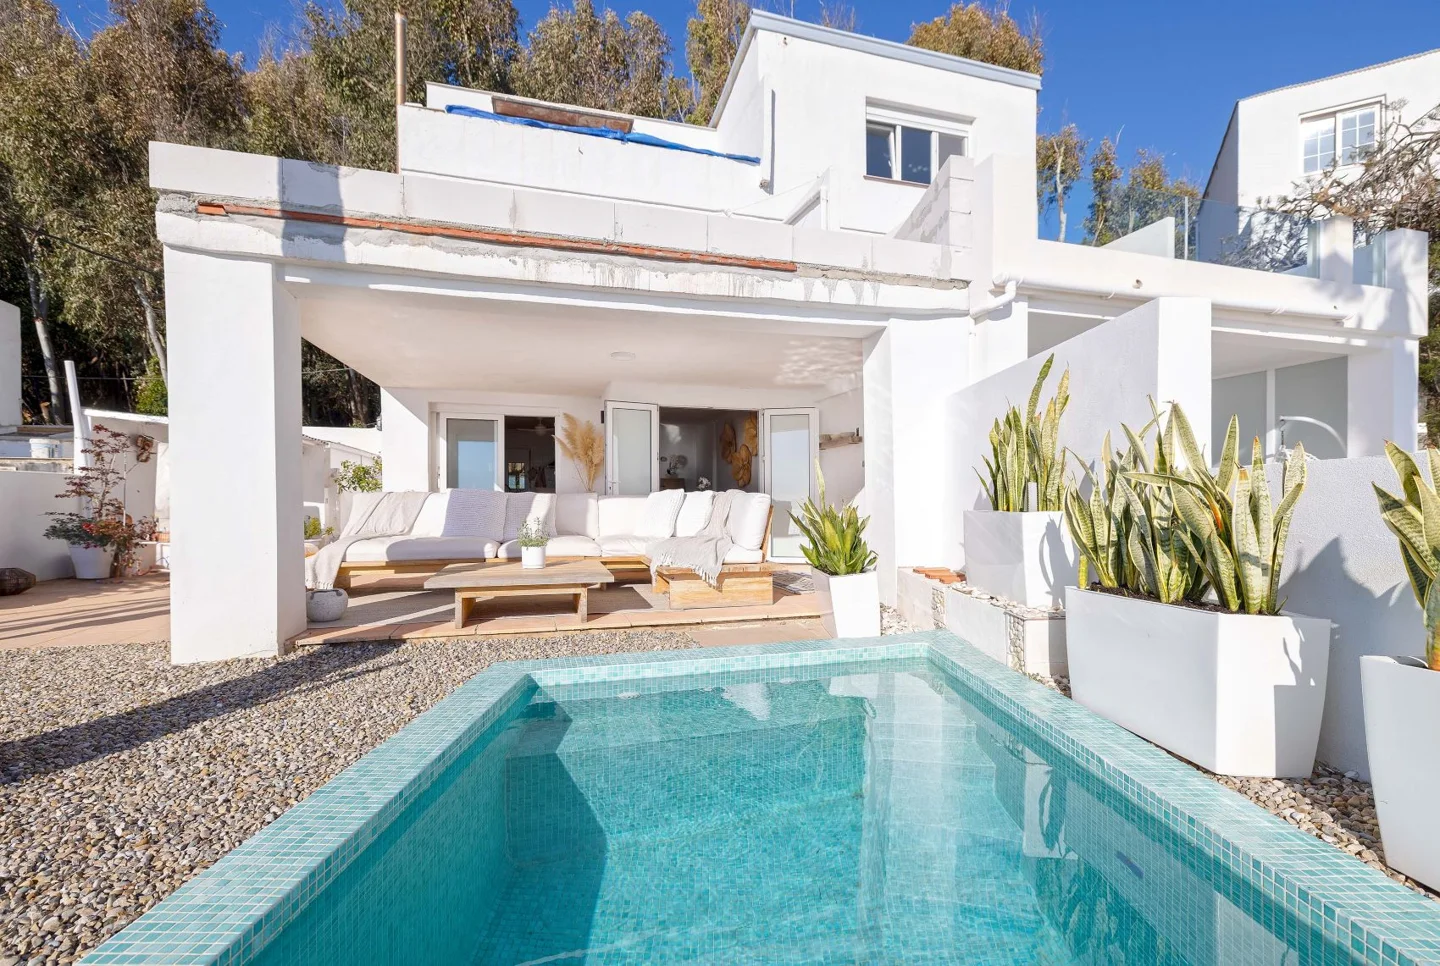 Das perfekte Strandhaus im Ibiza-Stil